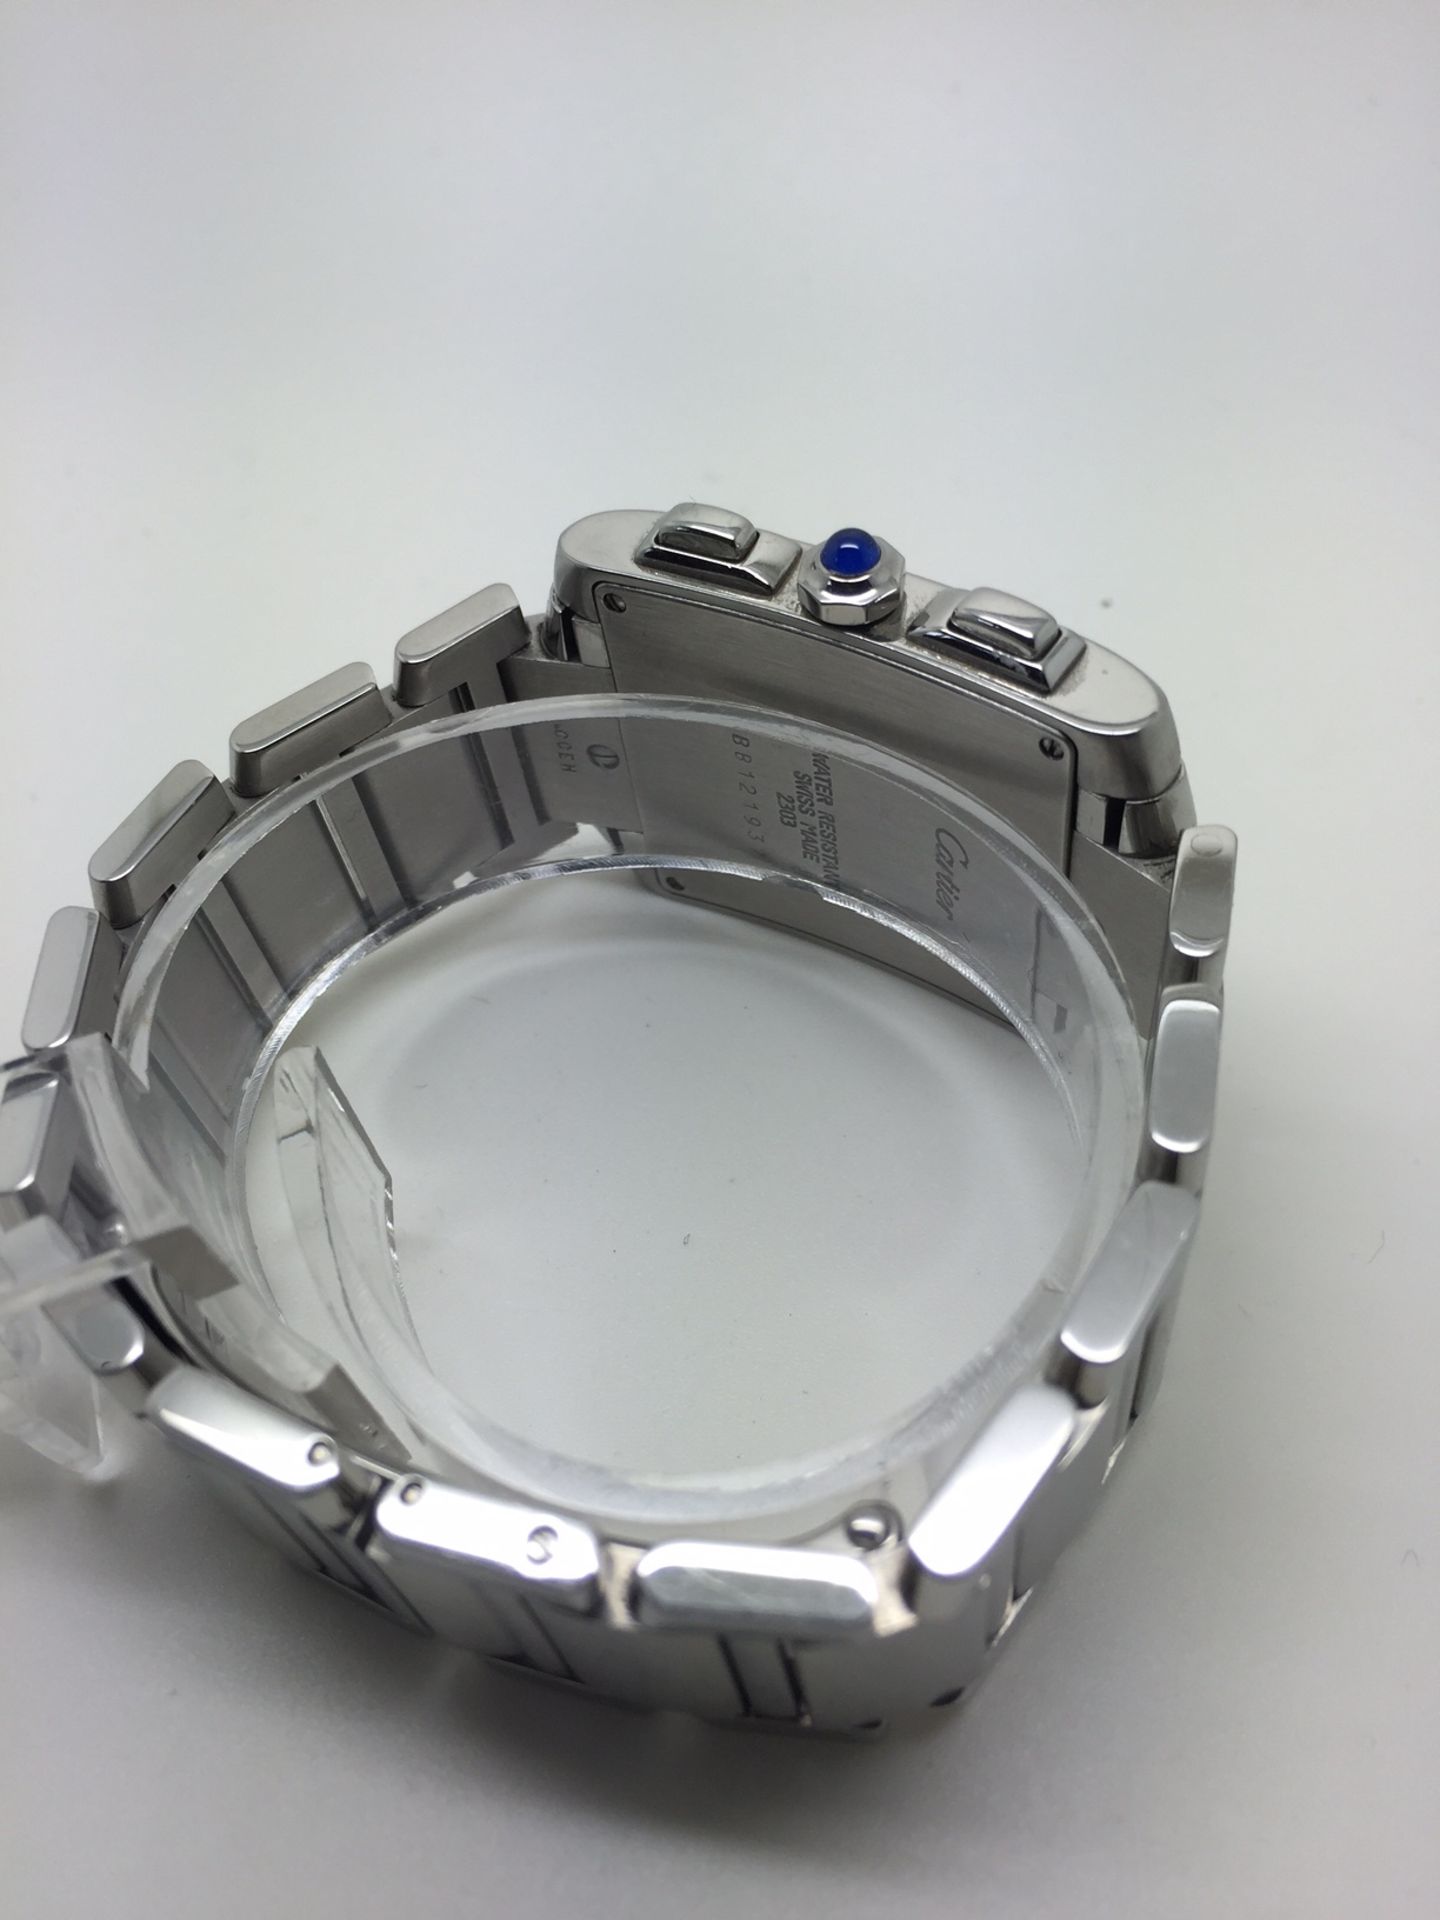 Cartier - Tank Francaise Chronoflex bracelet watch. Stainless steel case. - Image 4 of 4